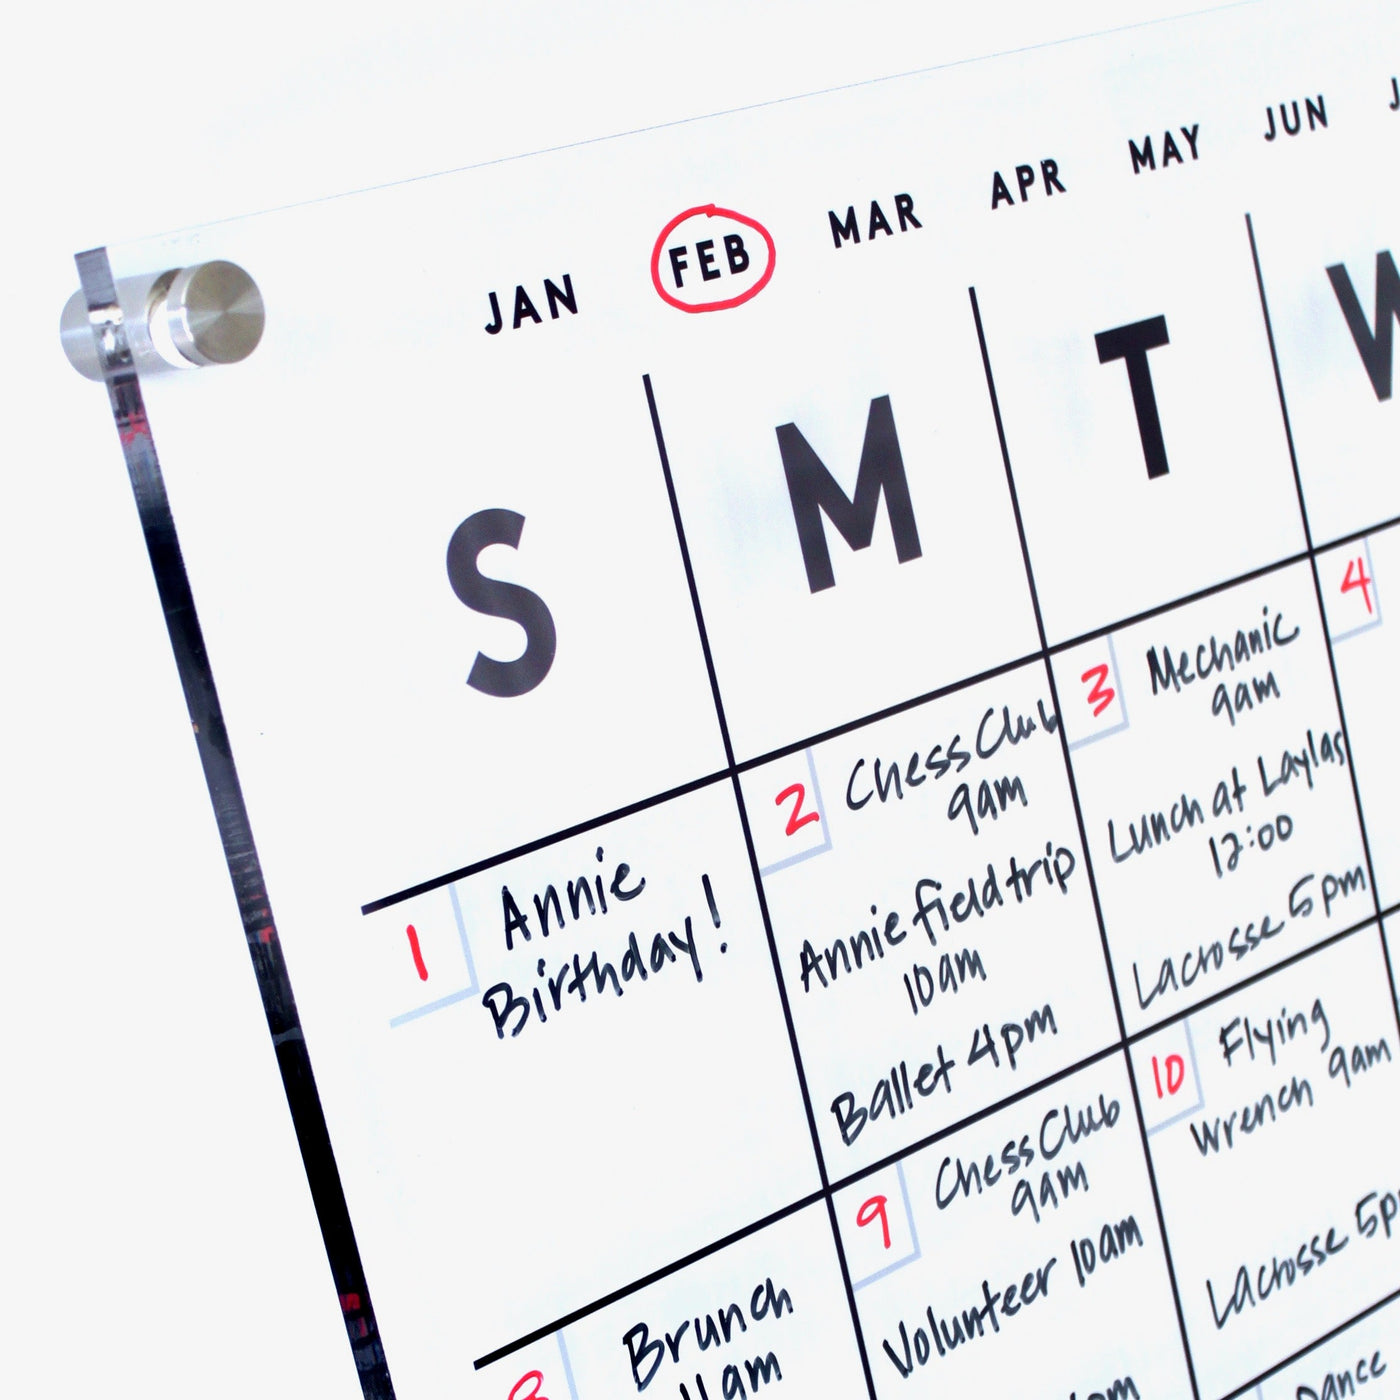 Dry erase calendar | Acrylic calendar one month and one week